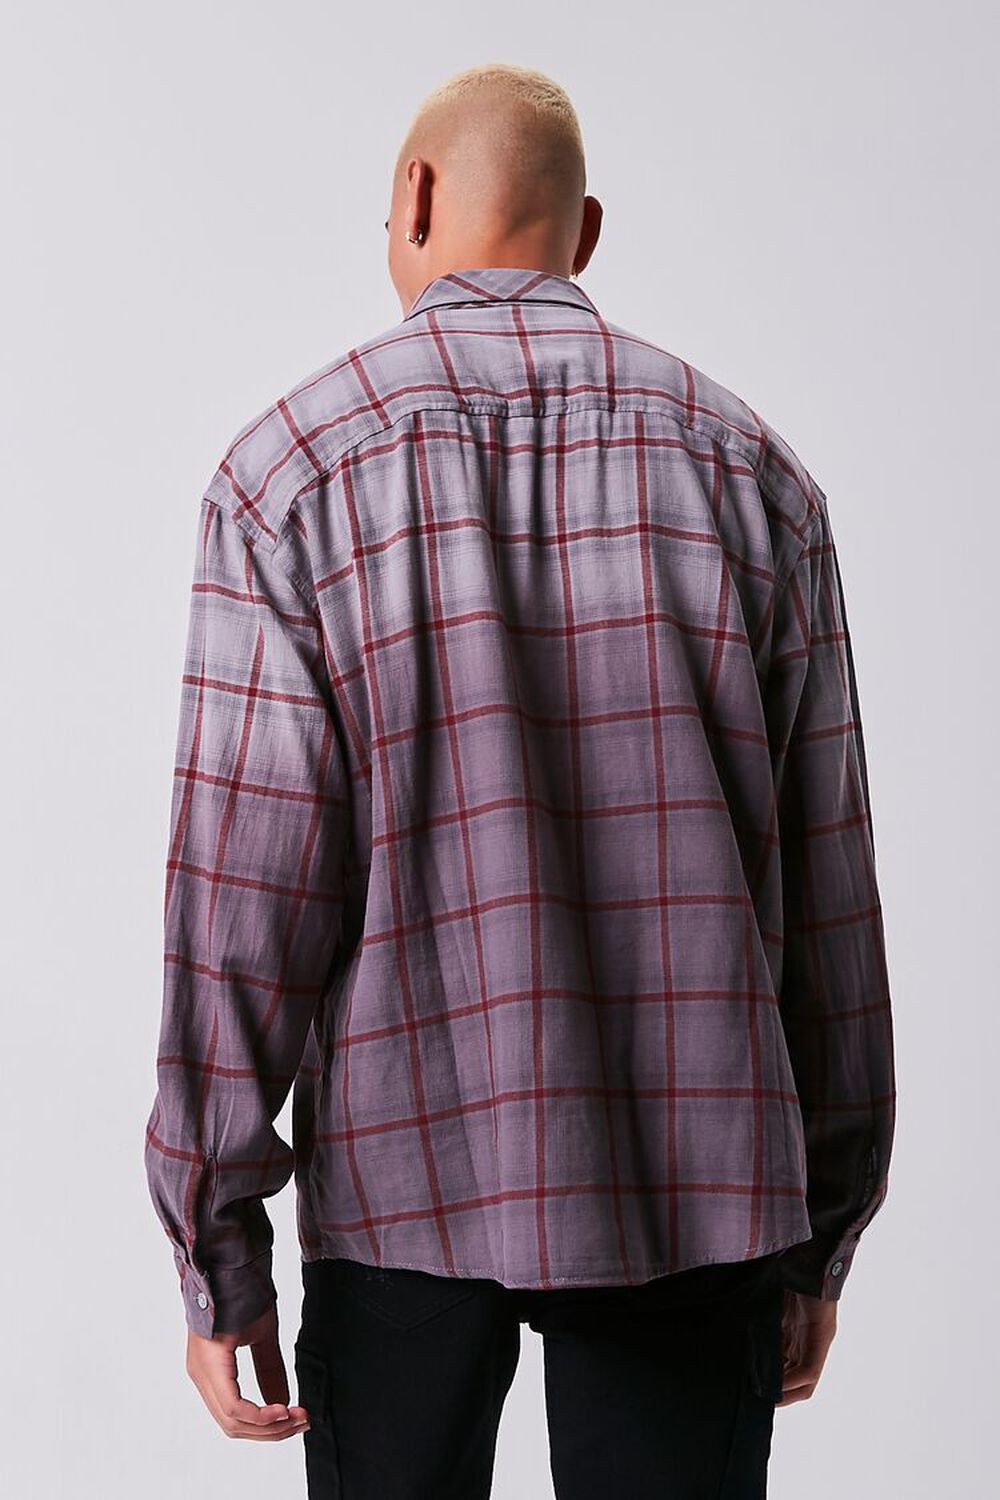 GREY/PLUM Grid Ombre Wash Flannel Shirt, image 3